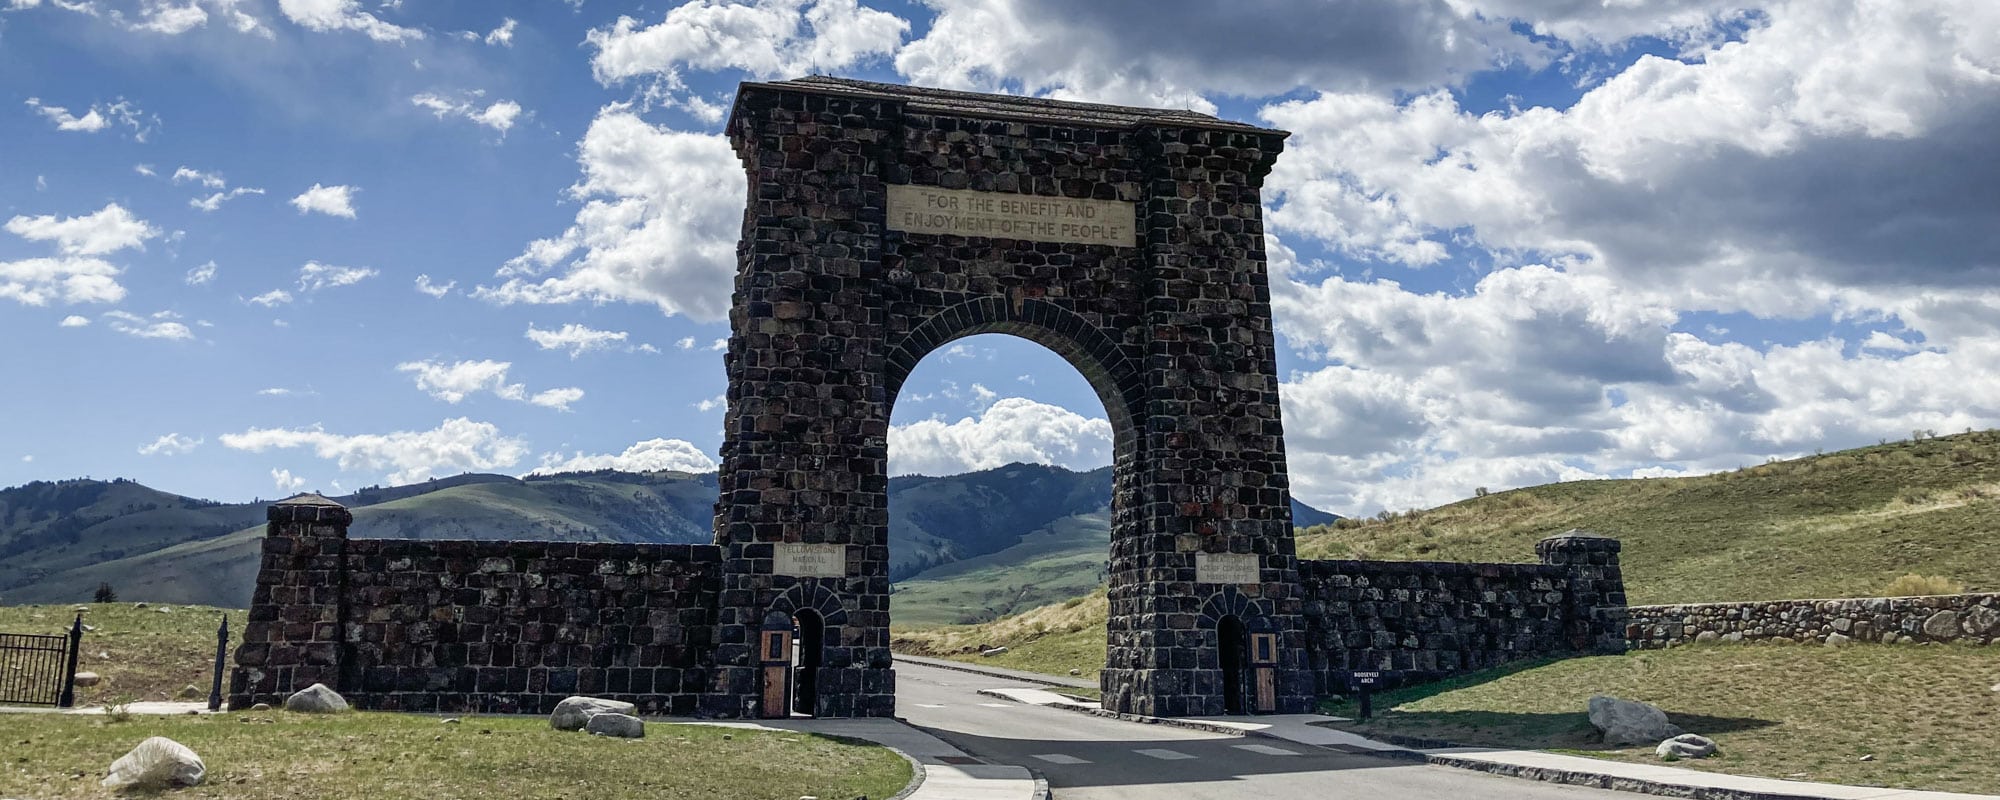 Roosevelt Arch in Gardiner, Montana